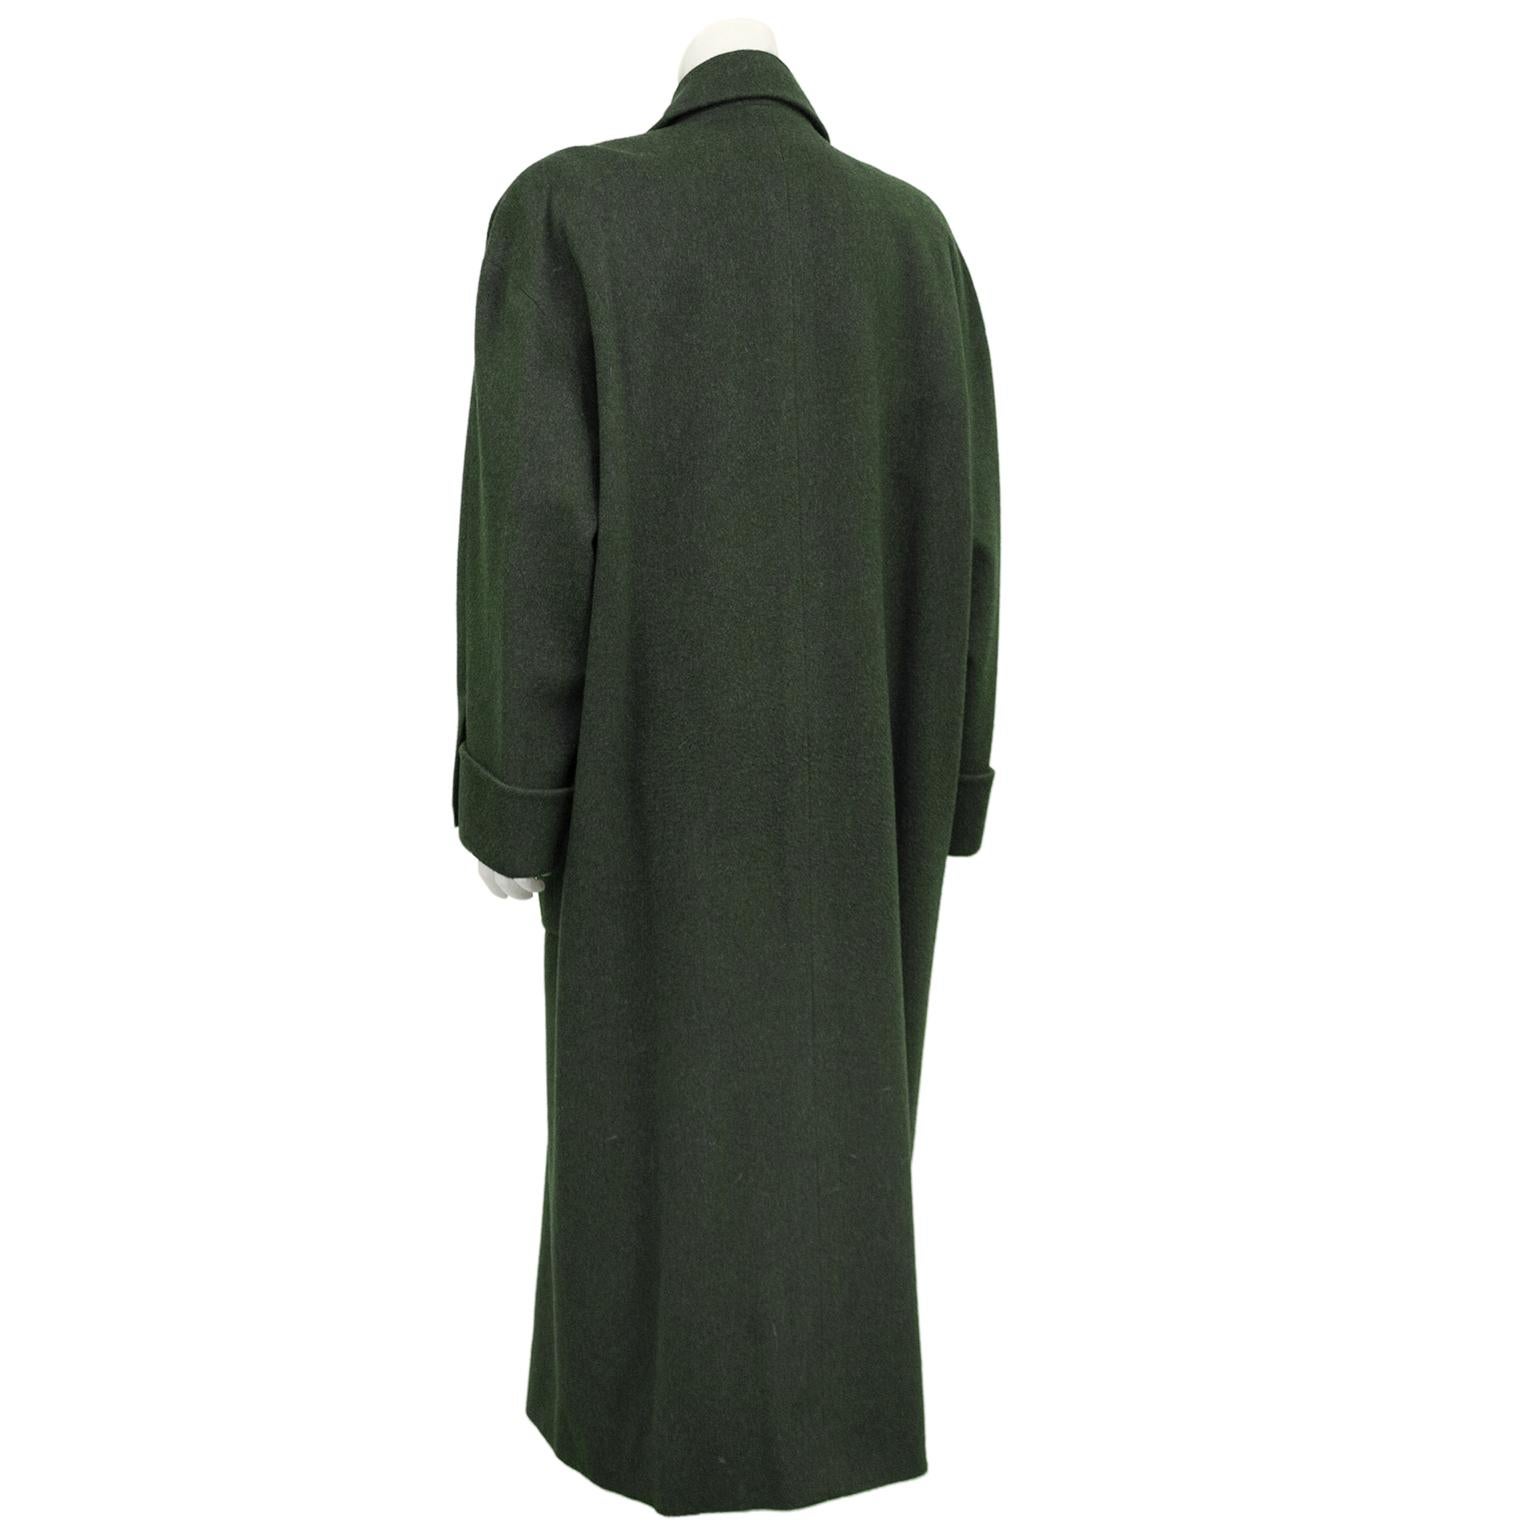 chanel green coat